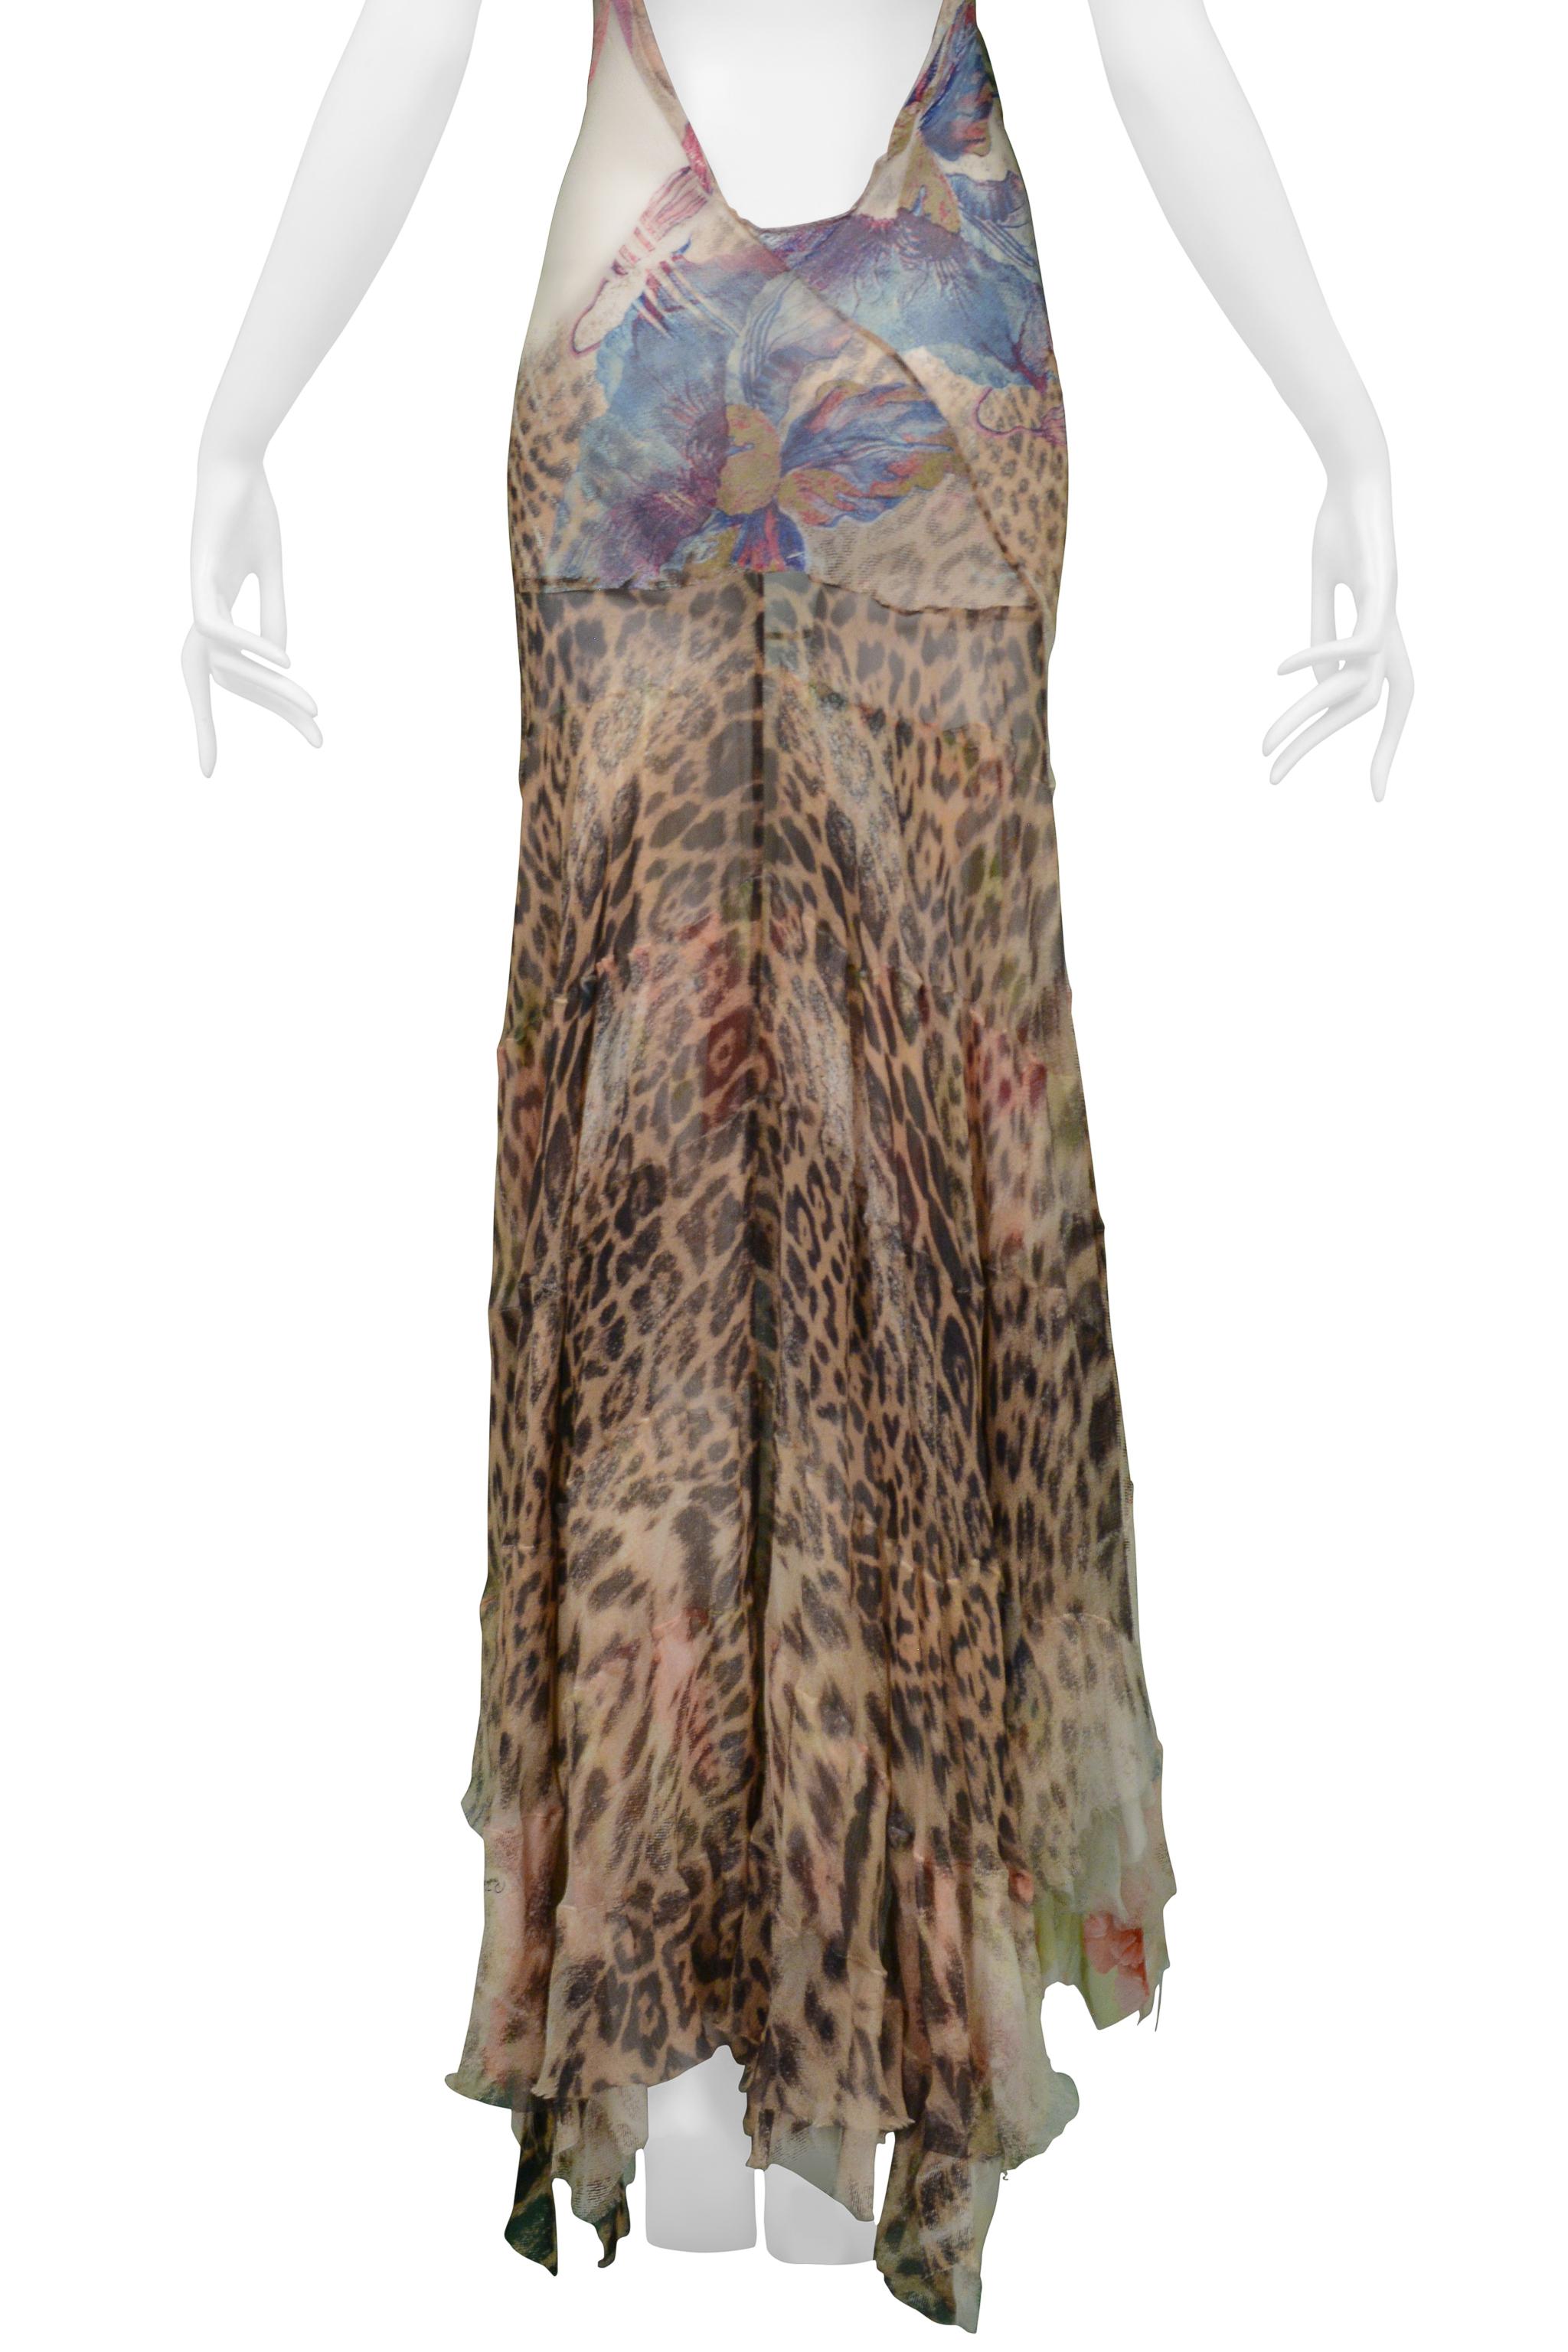 Roberto Cavalli Floral & Leopard Print Evening Gown 2002 5